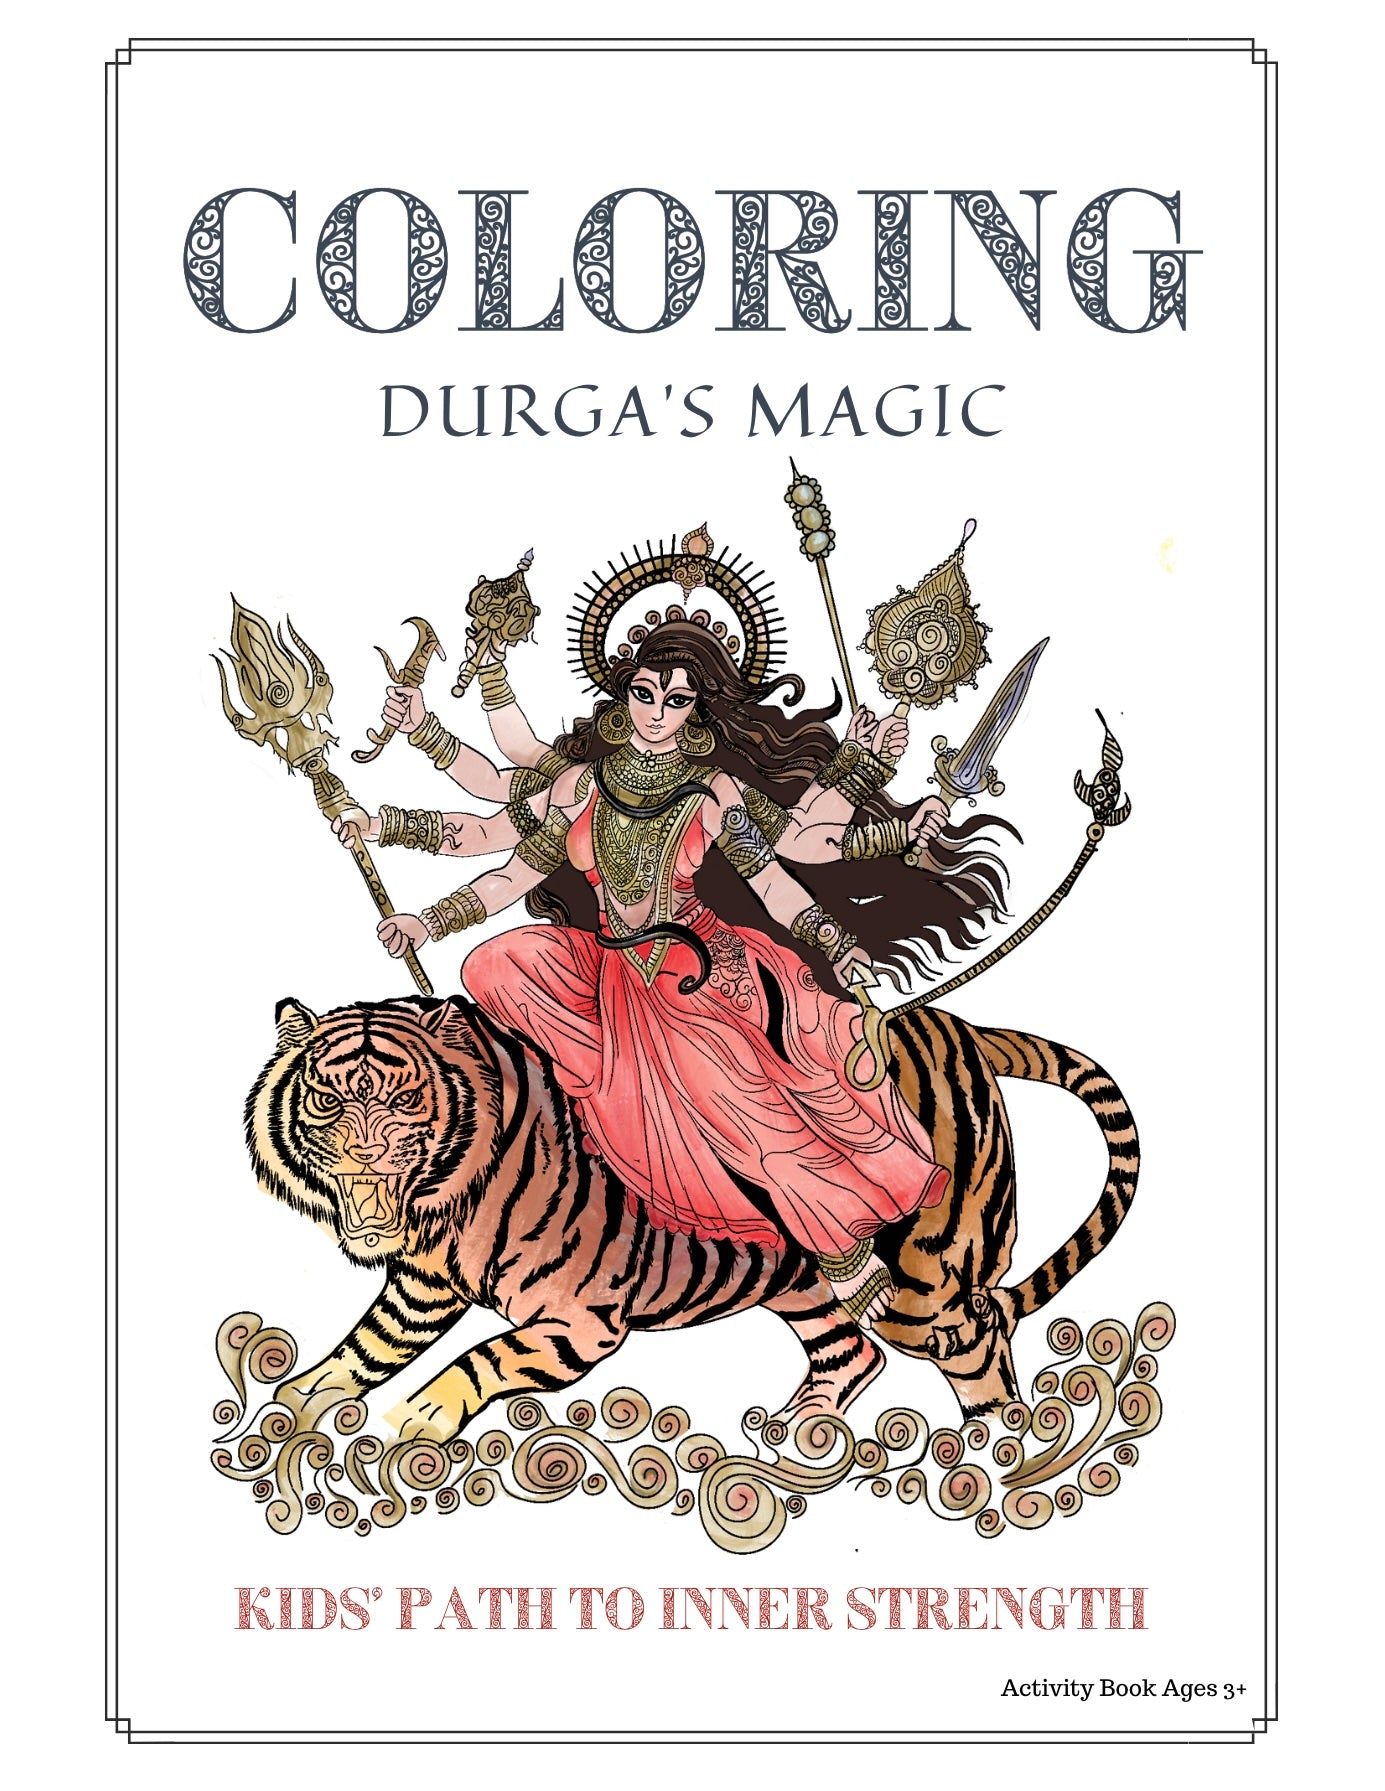 Coloring Durga's Magic: Kids' Path to Inner Strength